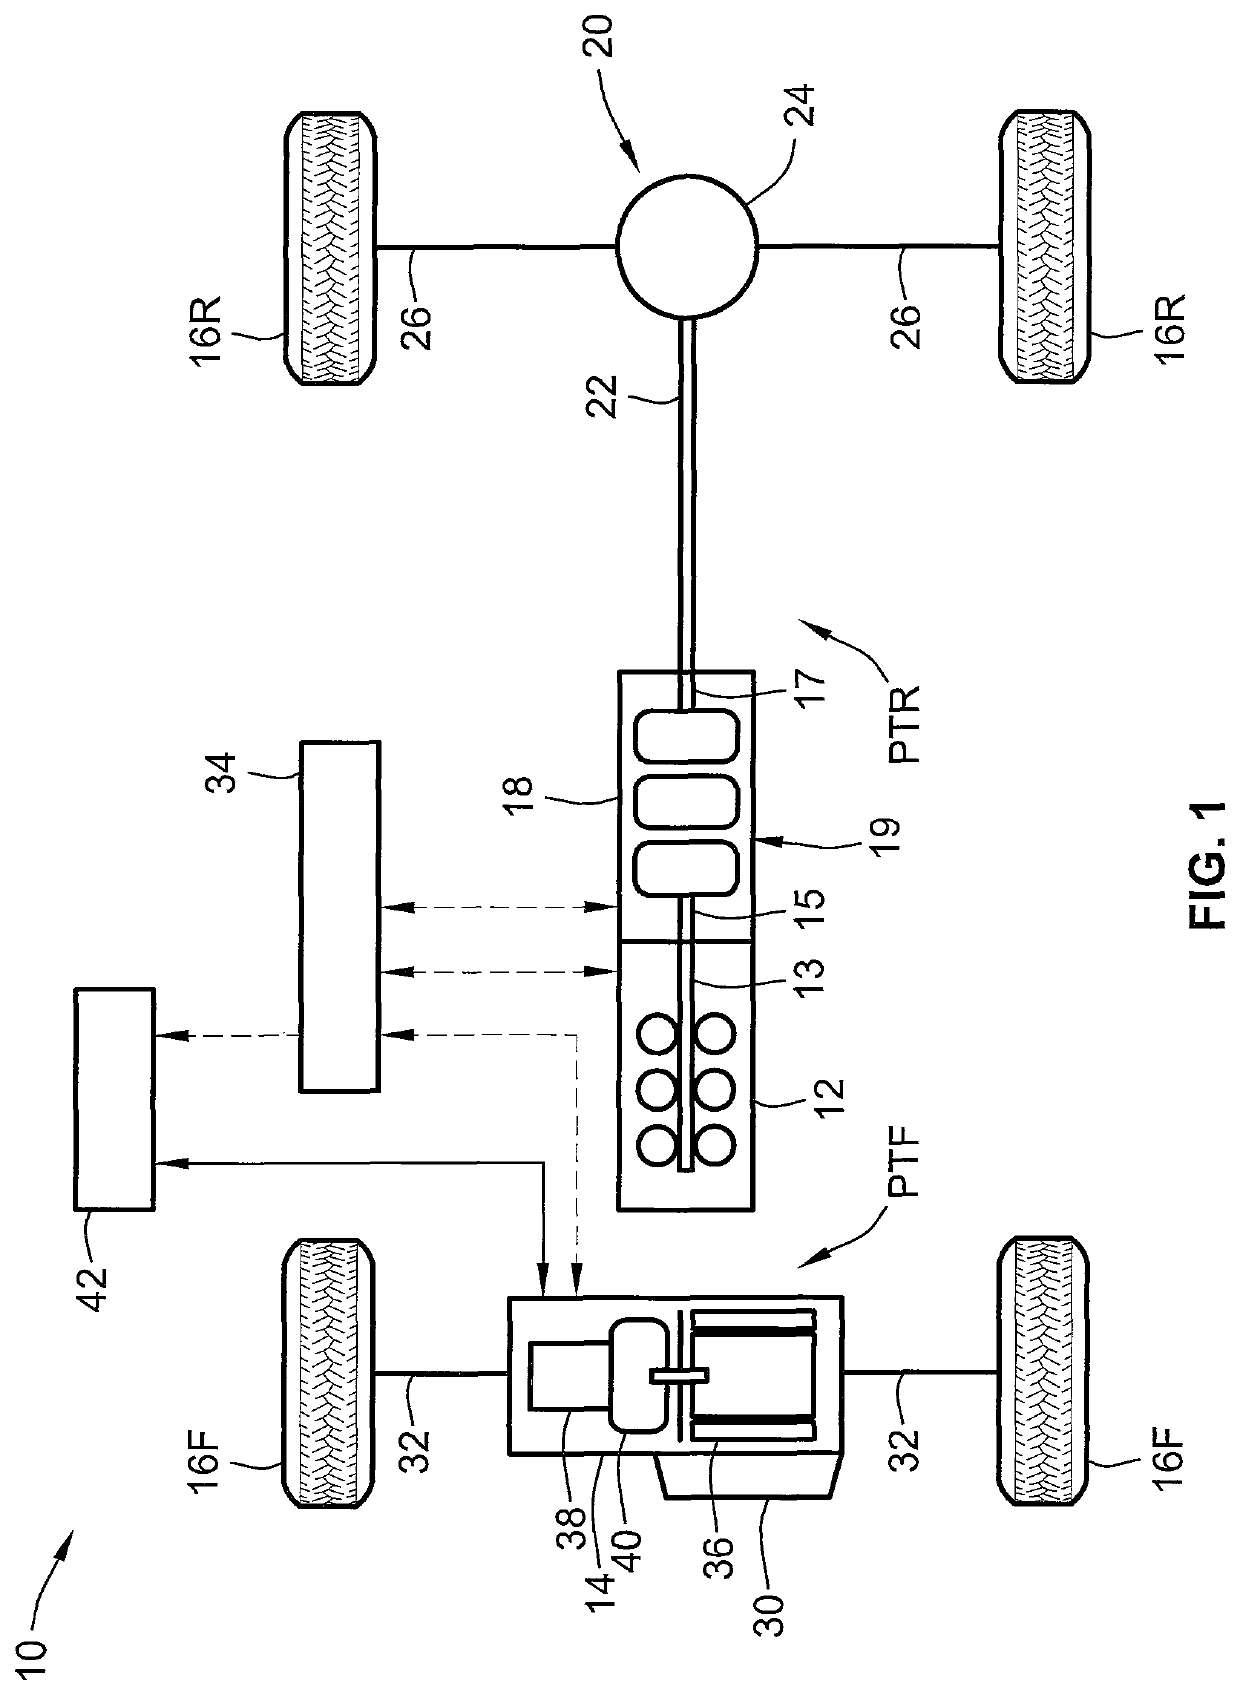 Optimized regenerative braking for hybrid electric vehicle (HEV) powertrain configurations